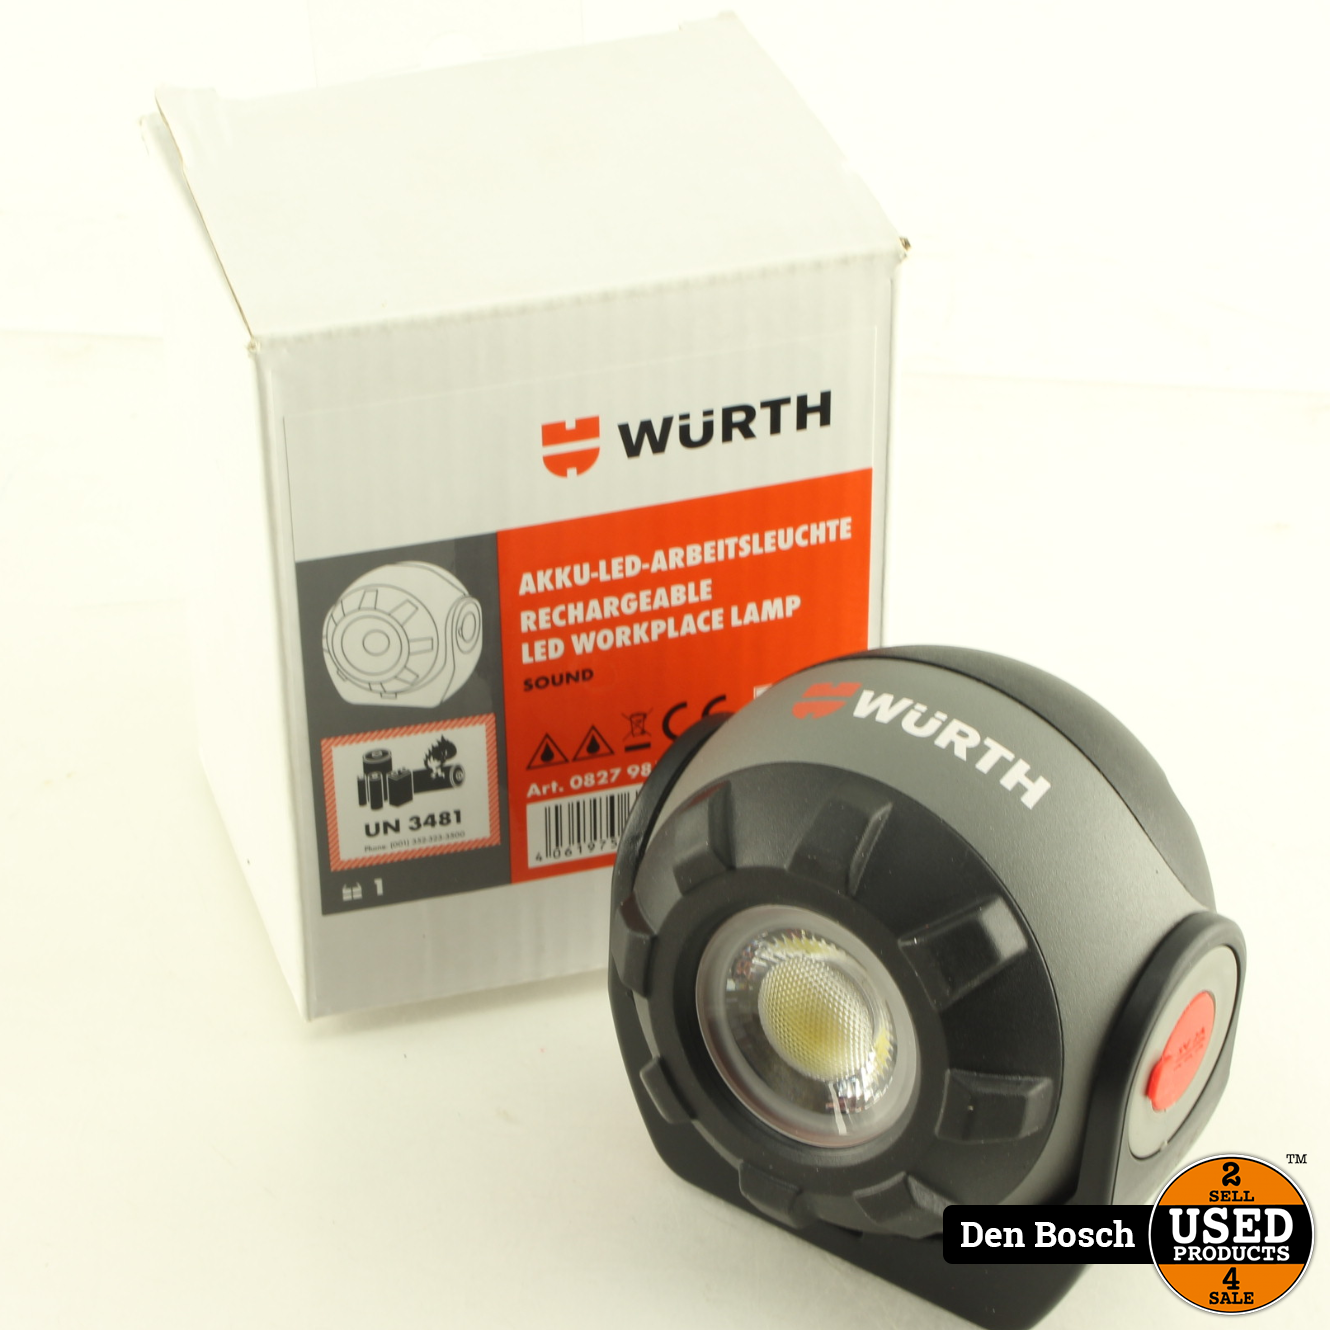 Democratie Luidspreker Ochtend gymnastiek Wurth Oplaadbare LED Werklamp met Bluetooth Speaker - Used Products Den  Bosch